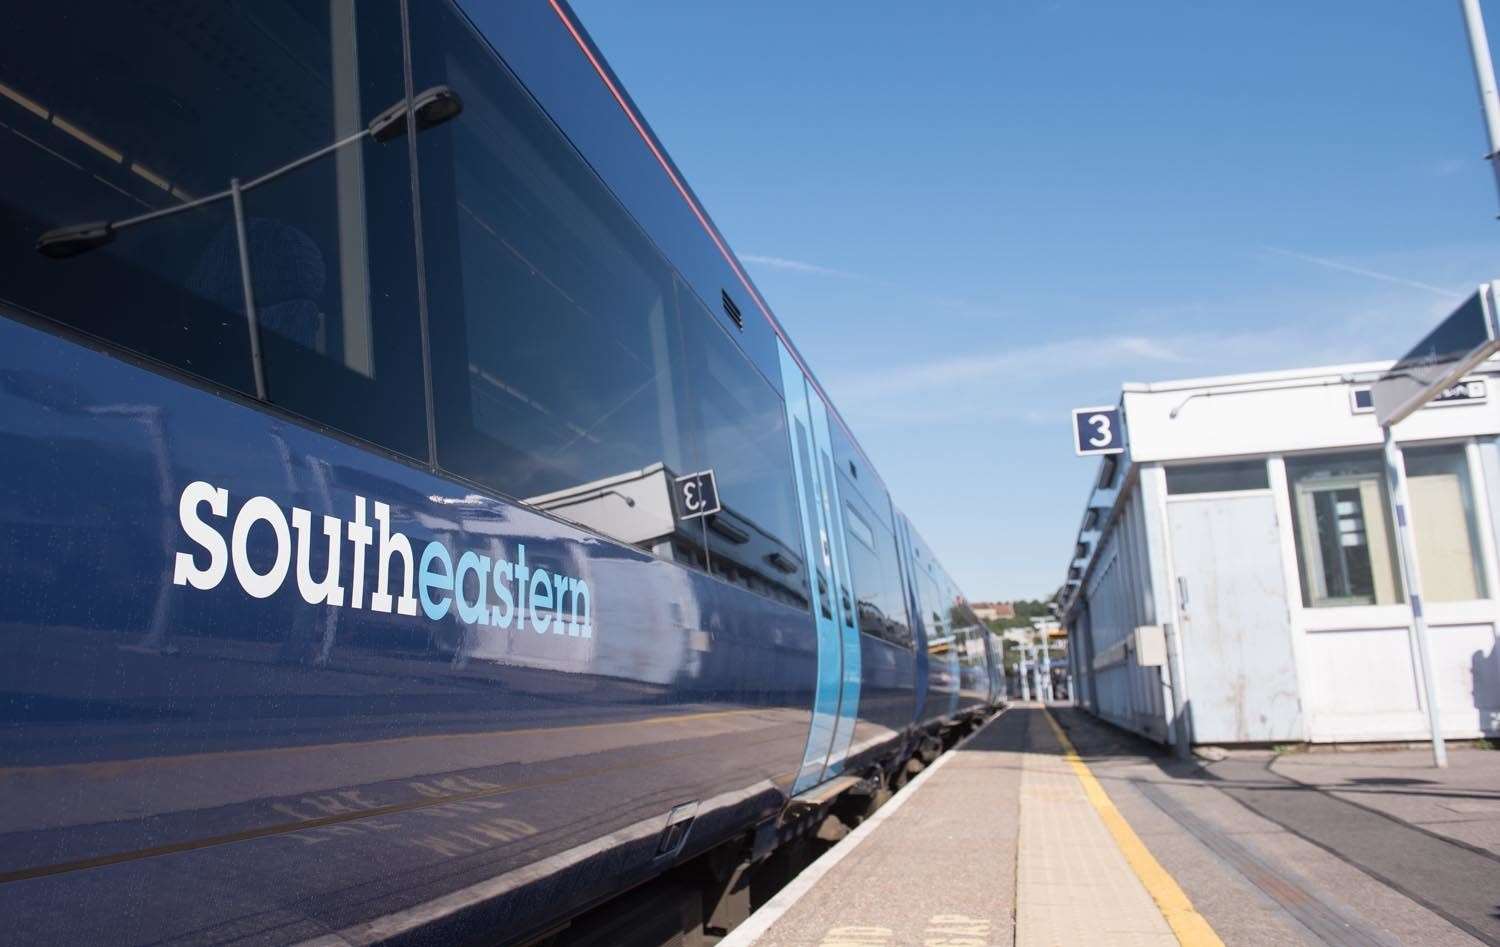 Southeastern trains halted between Tunbridge Wells and Hastings